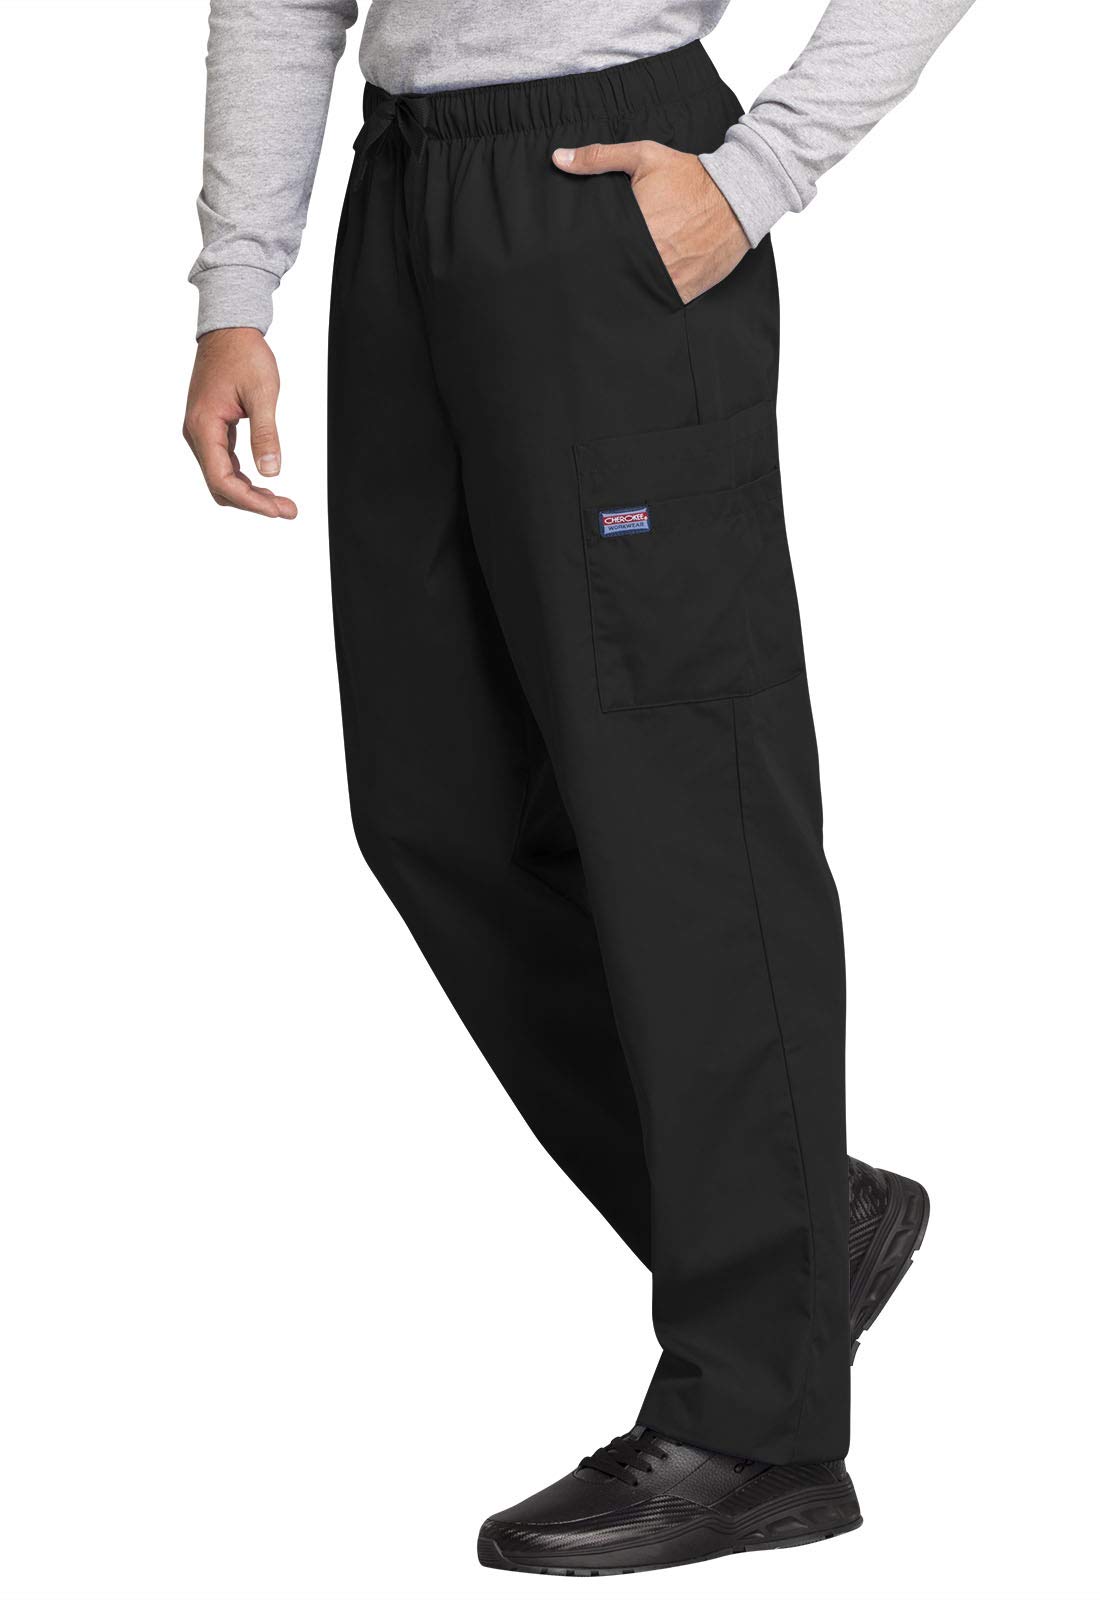 Medical Cargo Pants for Men Workwear Originals, Zipper Fly Scrubs for Men 4000